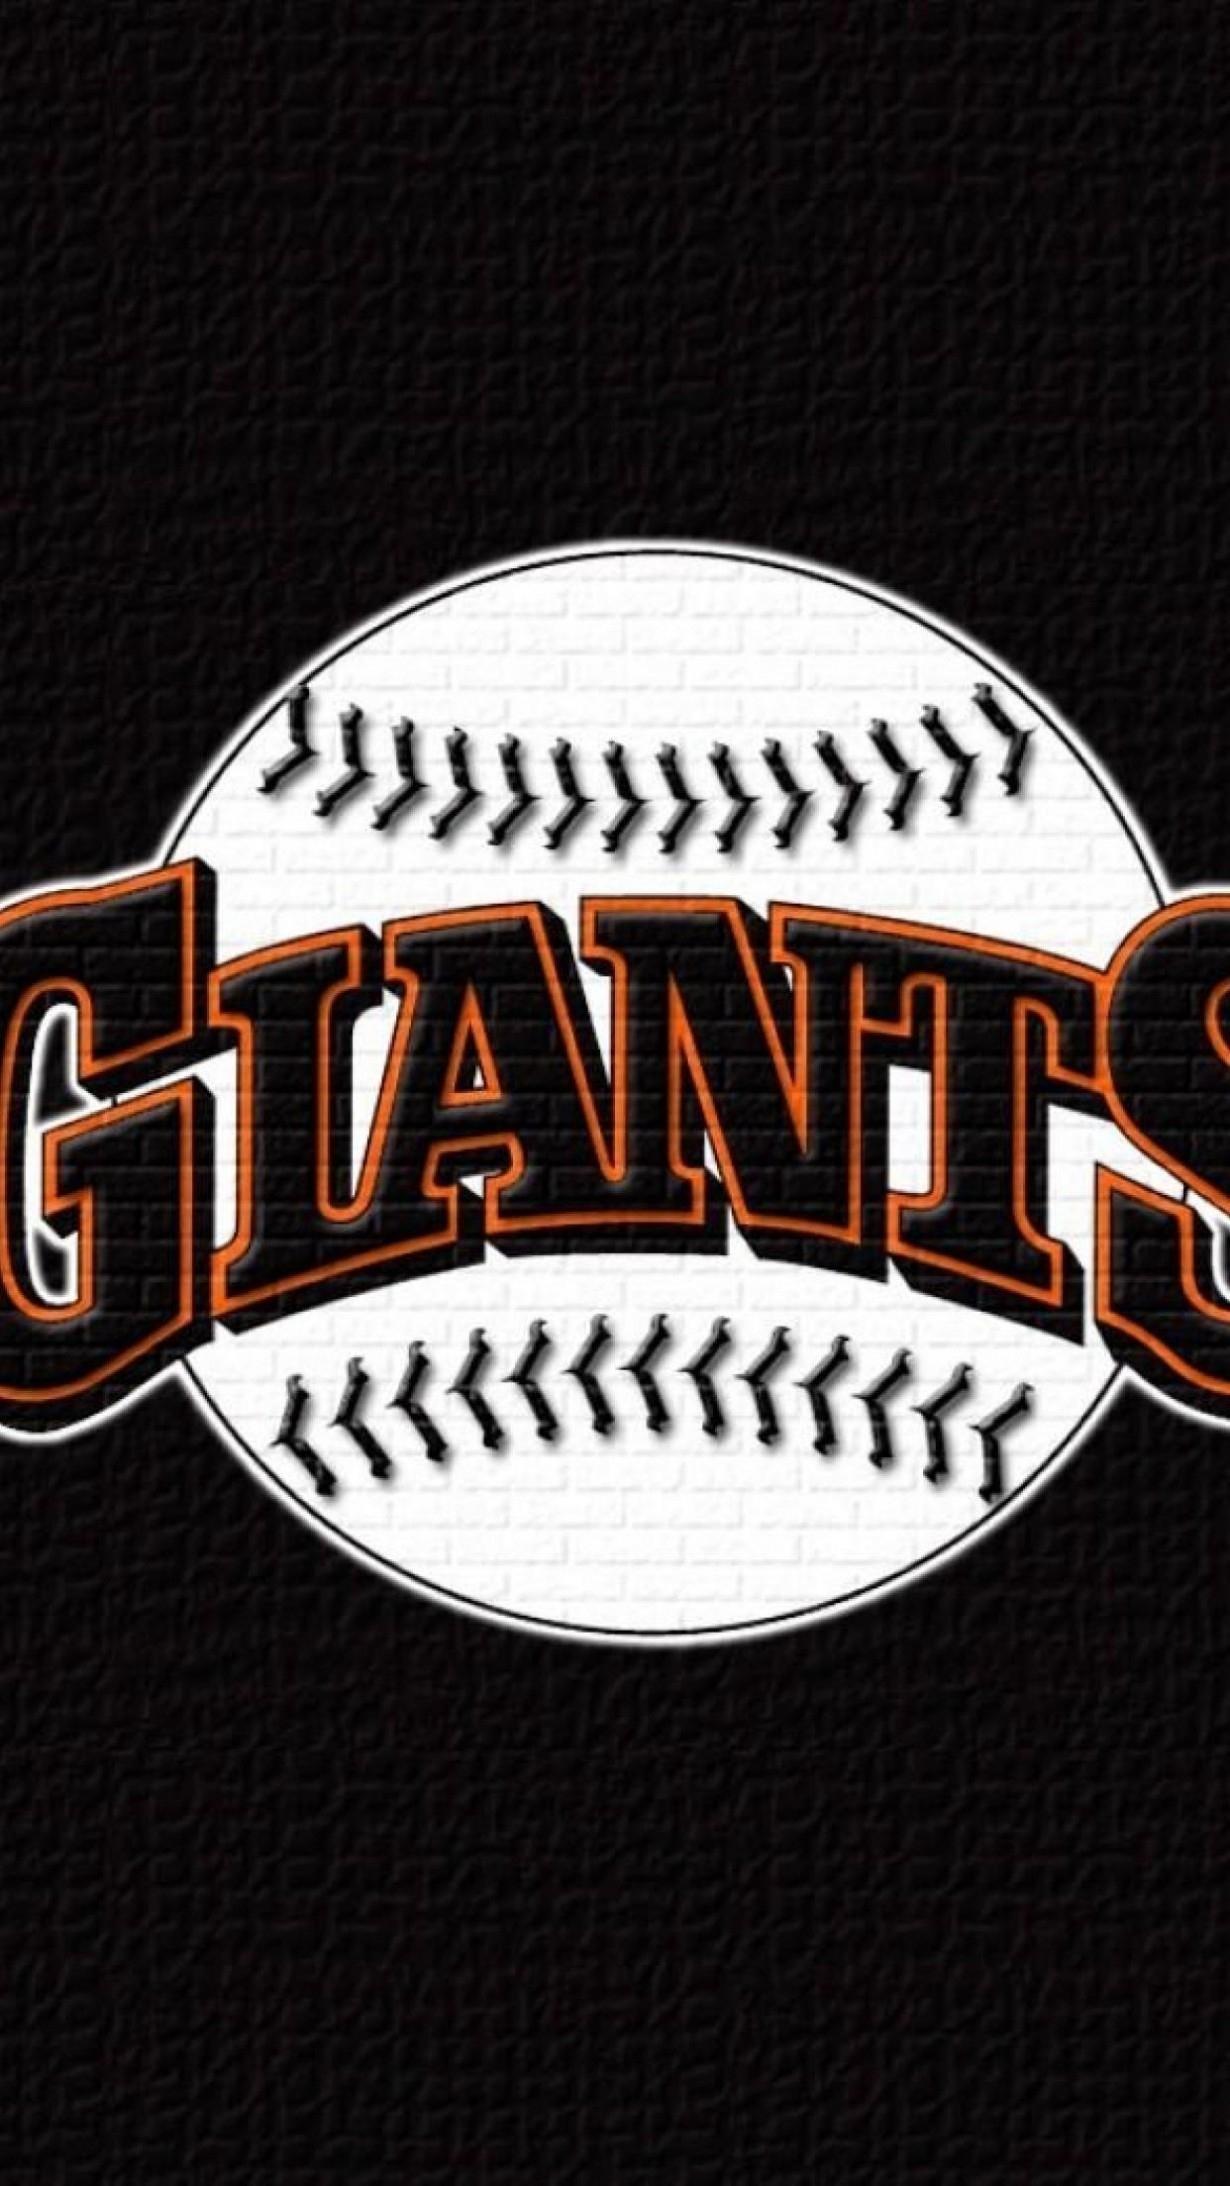 SF Giants iPhone X Lock screen wallpaper! #giantsbaseballlove